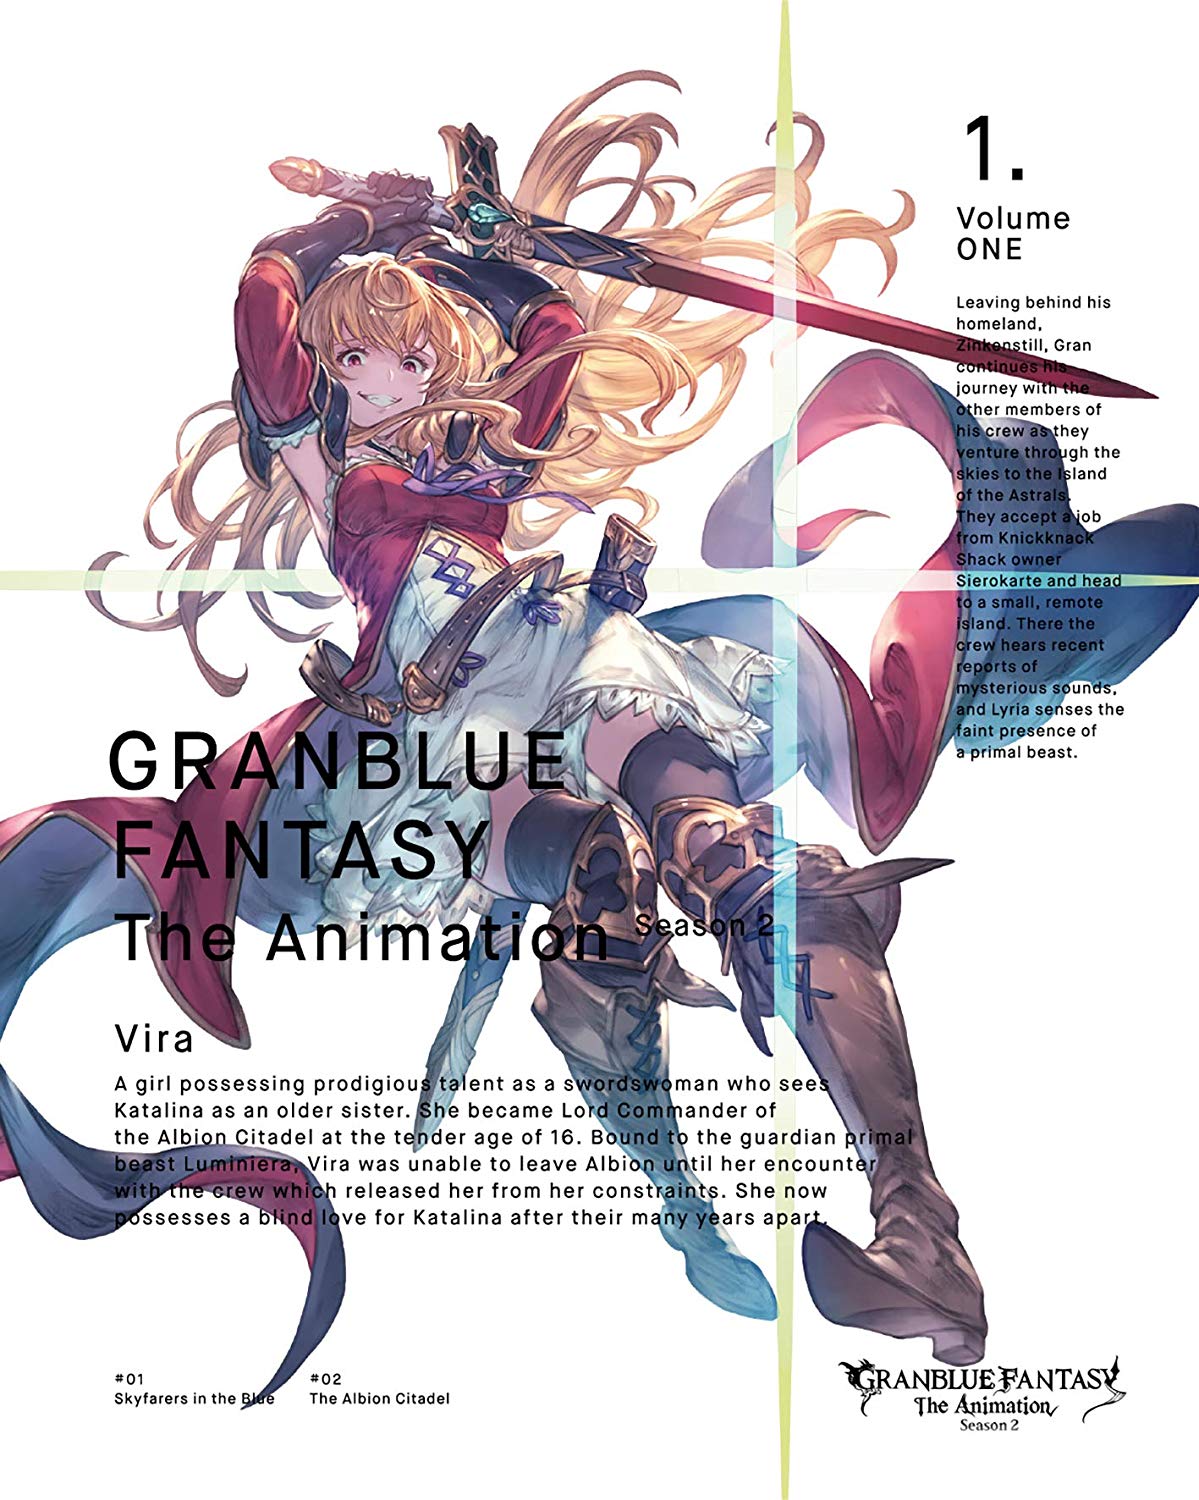 Granblue Fantasy The Animation Season 2 Vol 1 Limited Edition